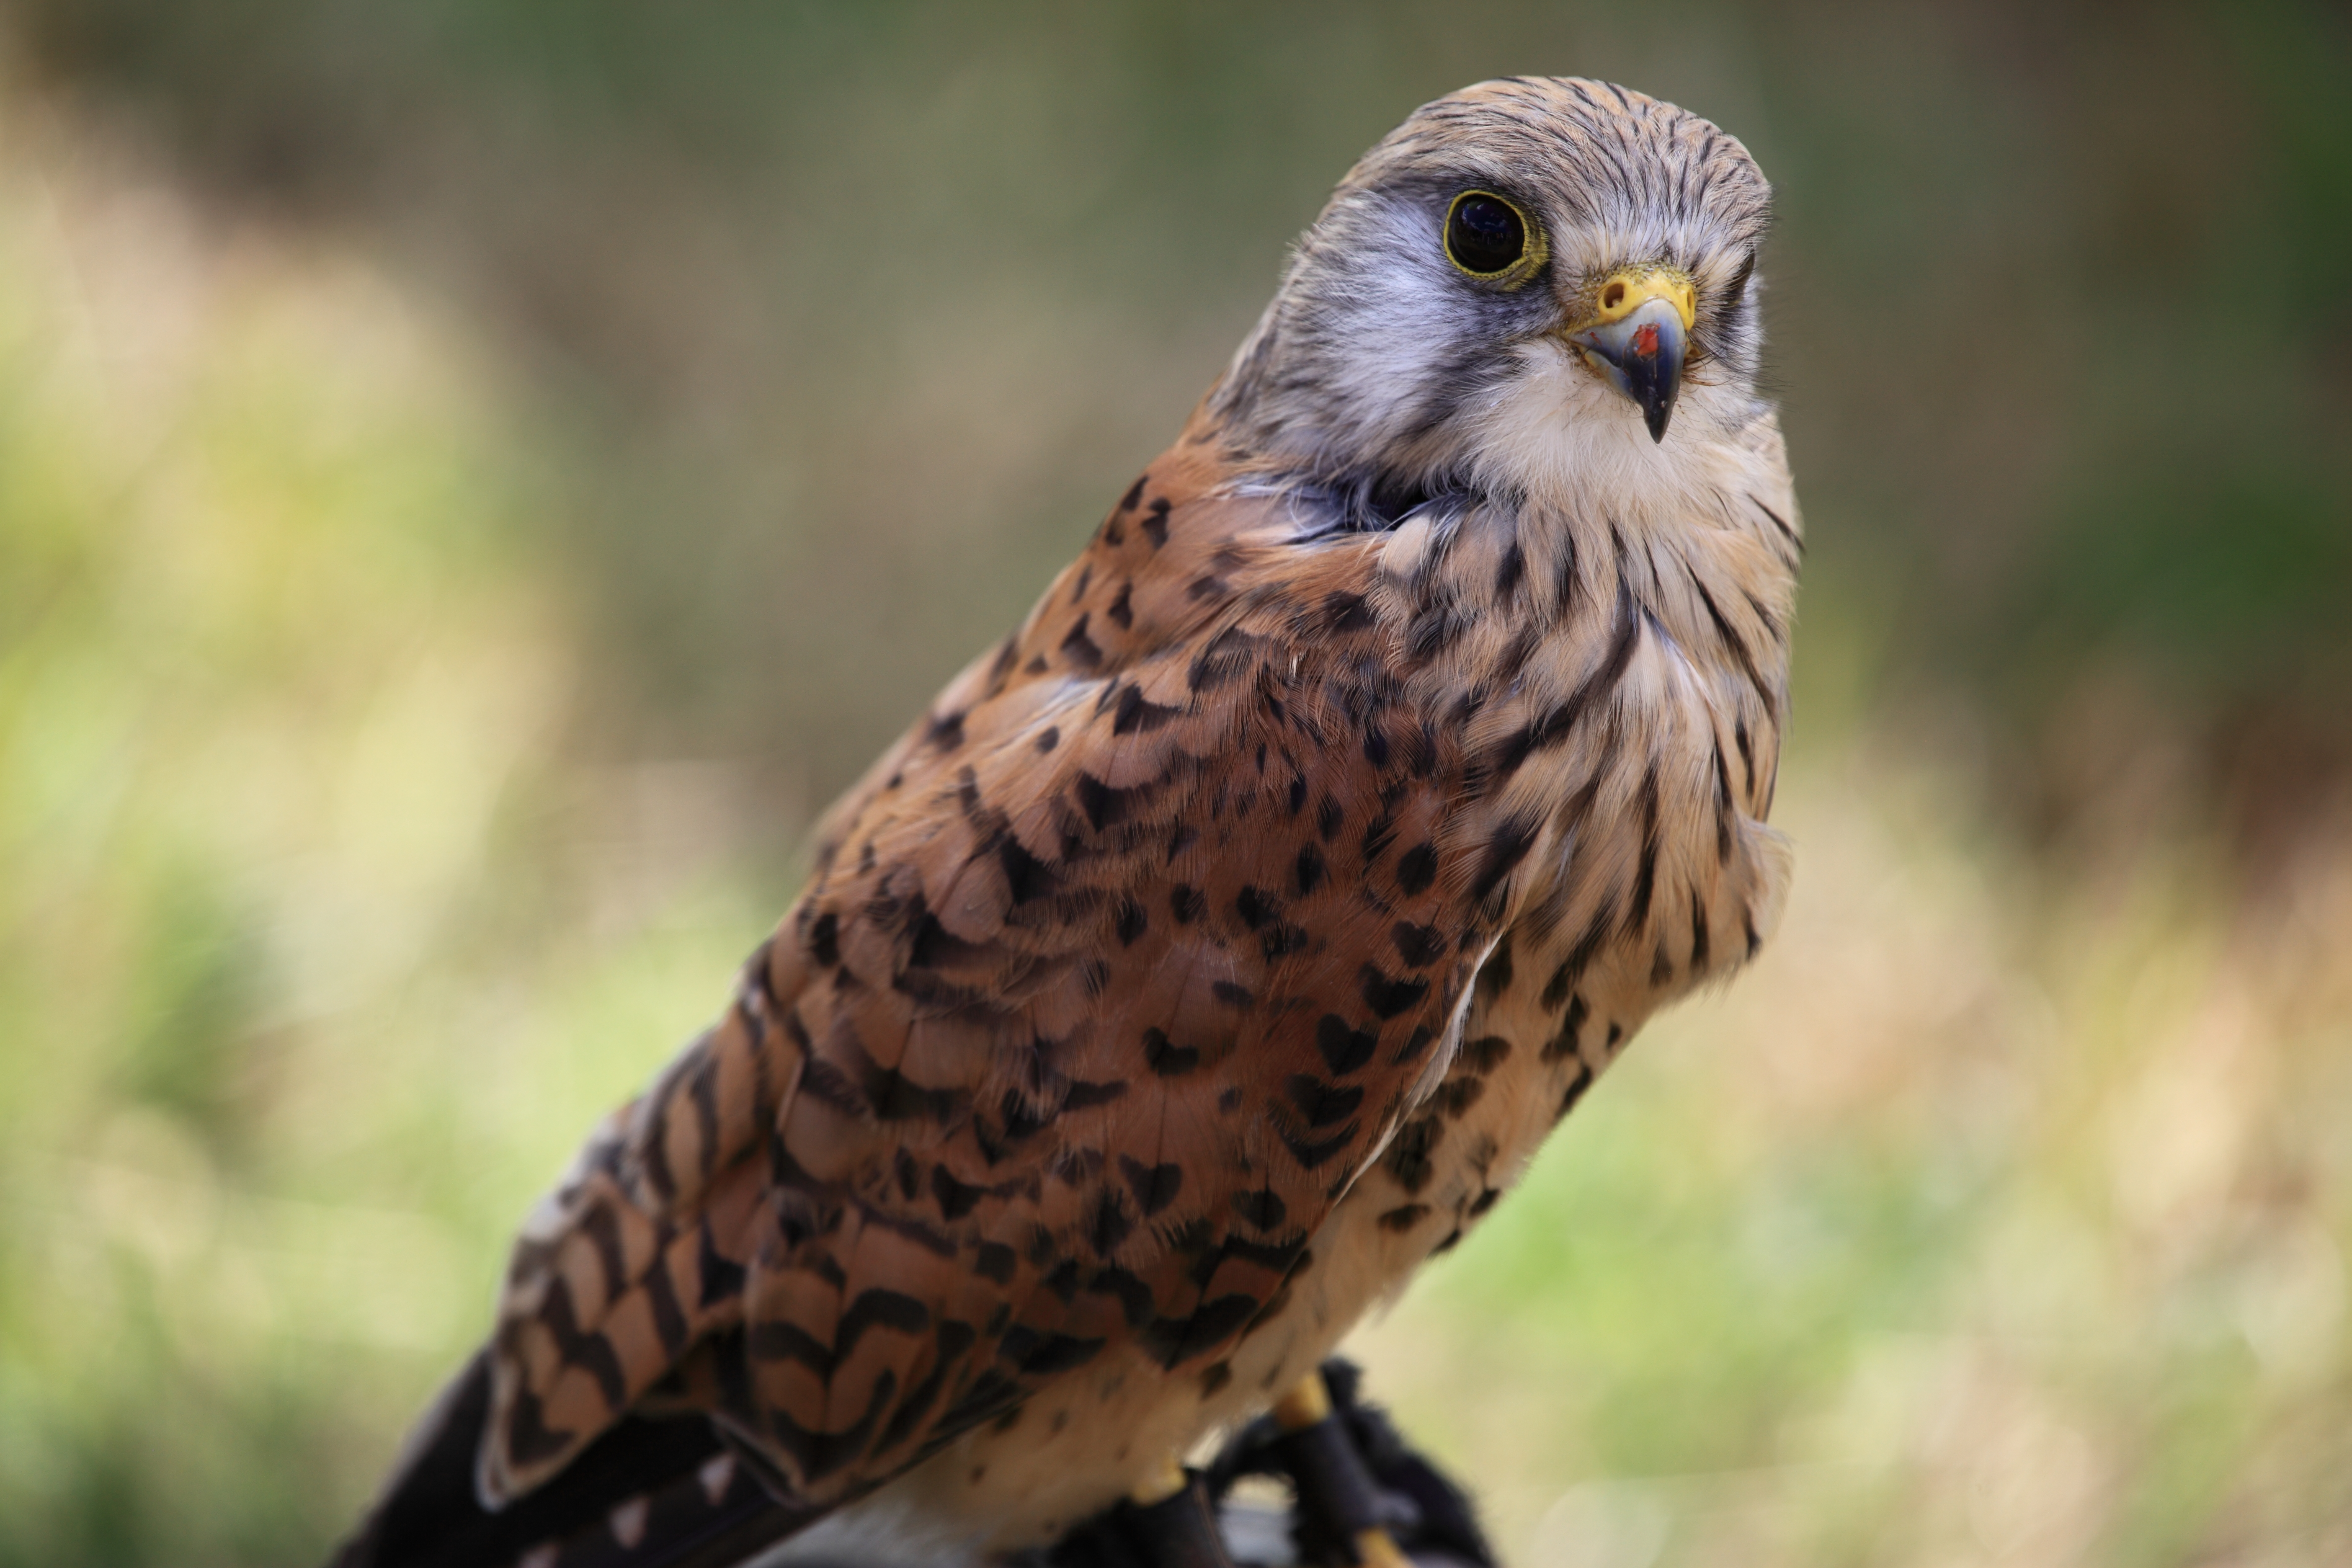 Bird of prey at Painshill Park Copyright Chris Bushe